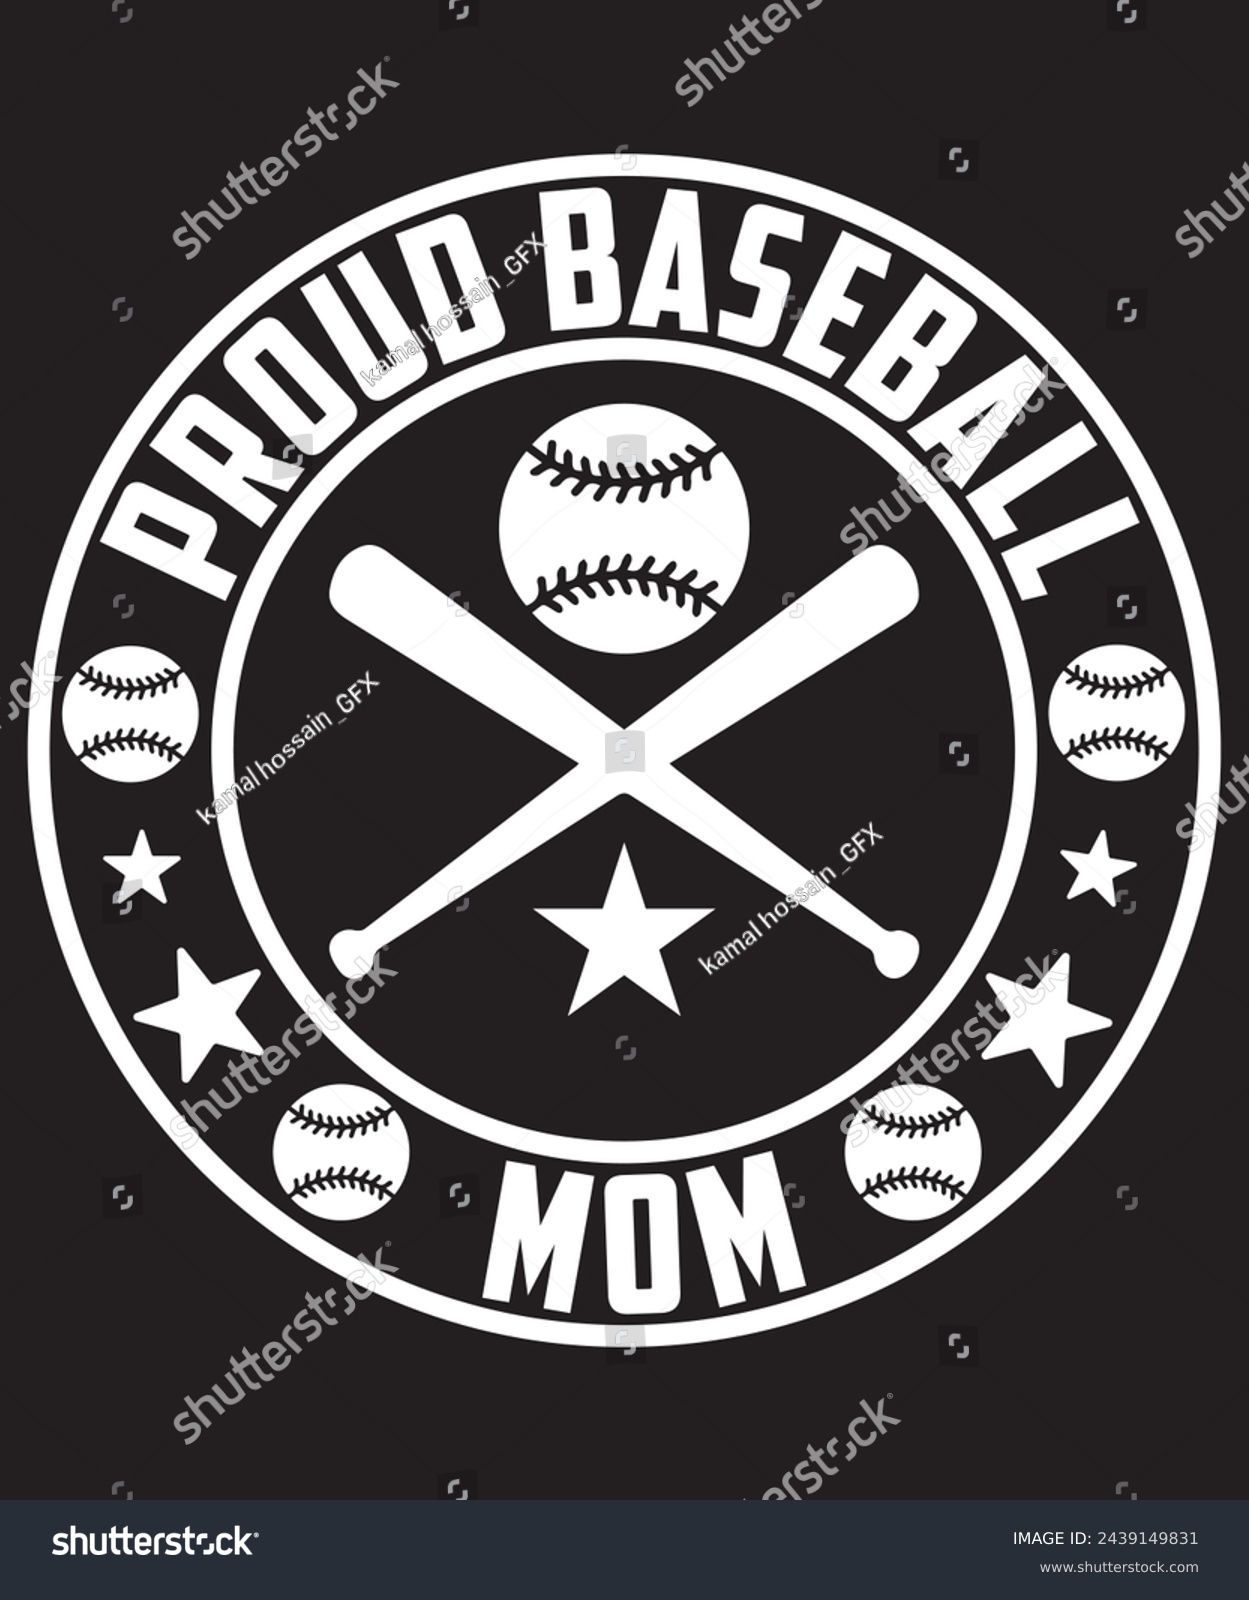 SVG of proud baseball mom t-shirt design. vector illustration svg